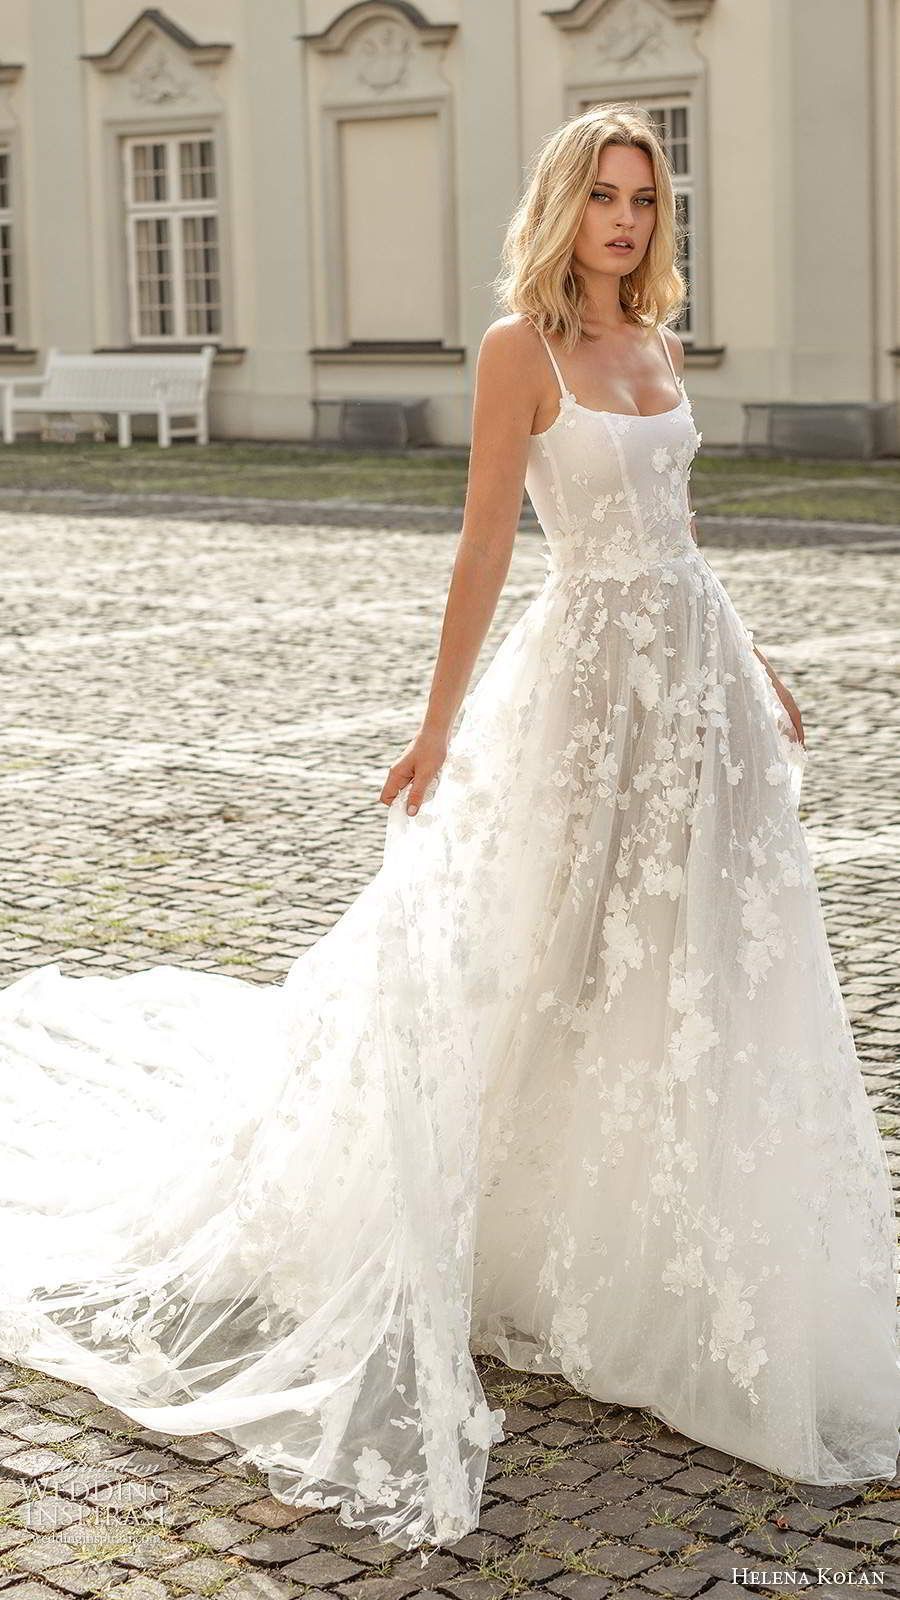 Helena Kolan 2020 Wedding Dresses — “Forever” Bridal Collection | Wedding Inspirasi -   16 dress Wedding neckline ideas